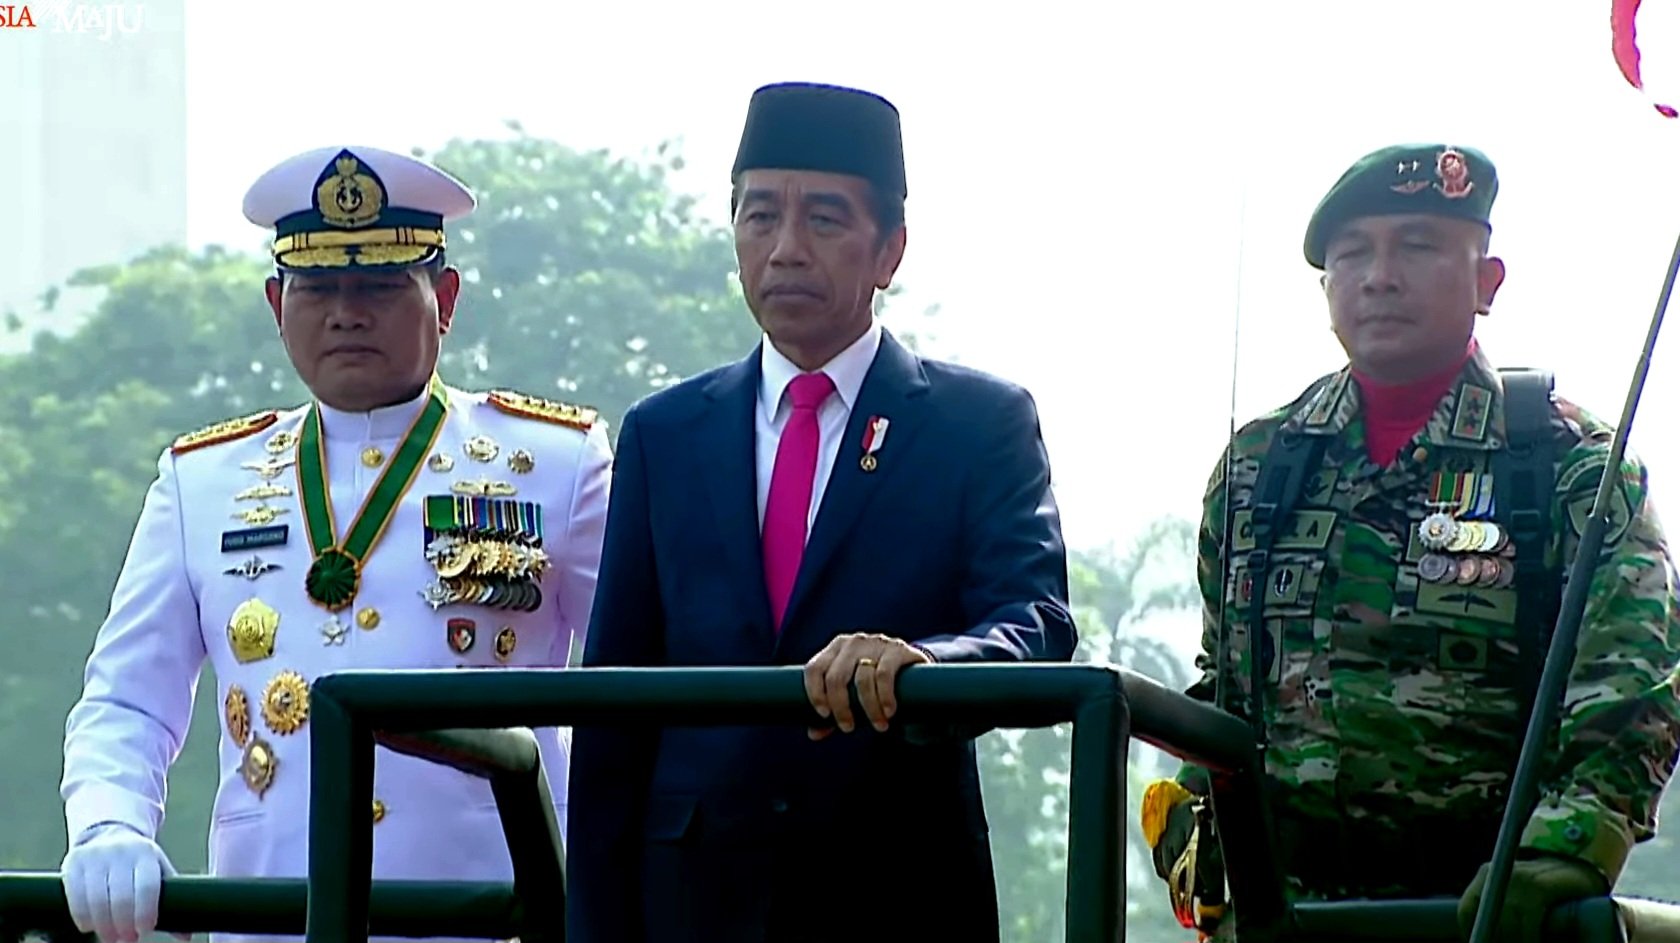 Presiden Joko Widodo saat melakukan inspeksi barisan (Sinpo.id/Setkab)